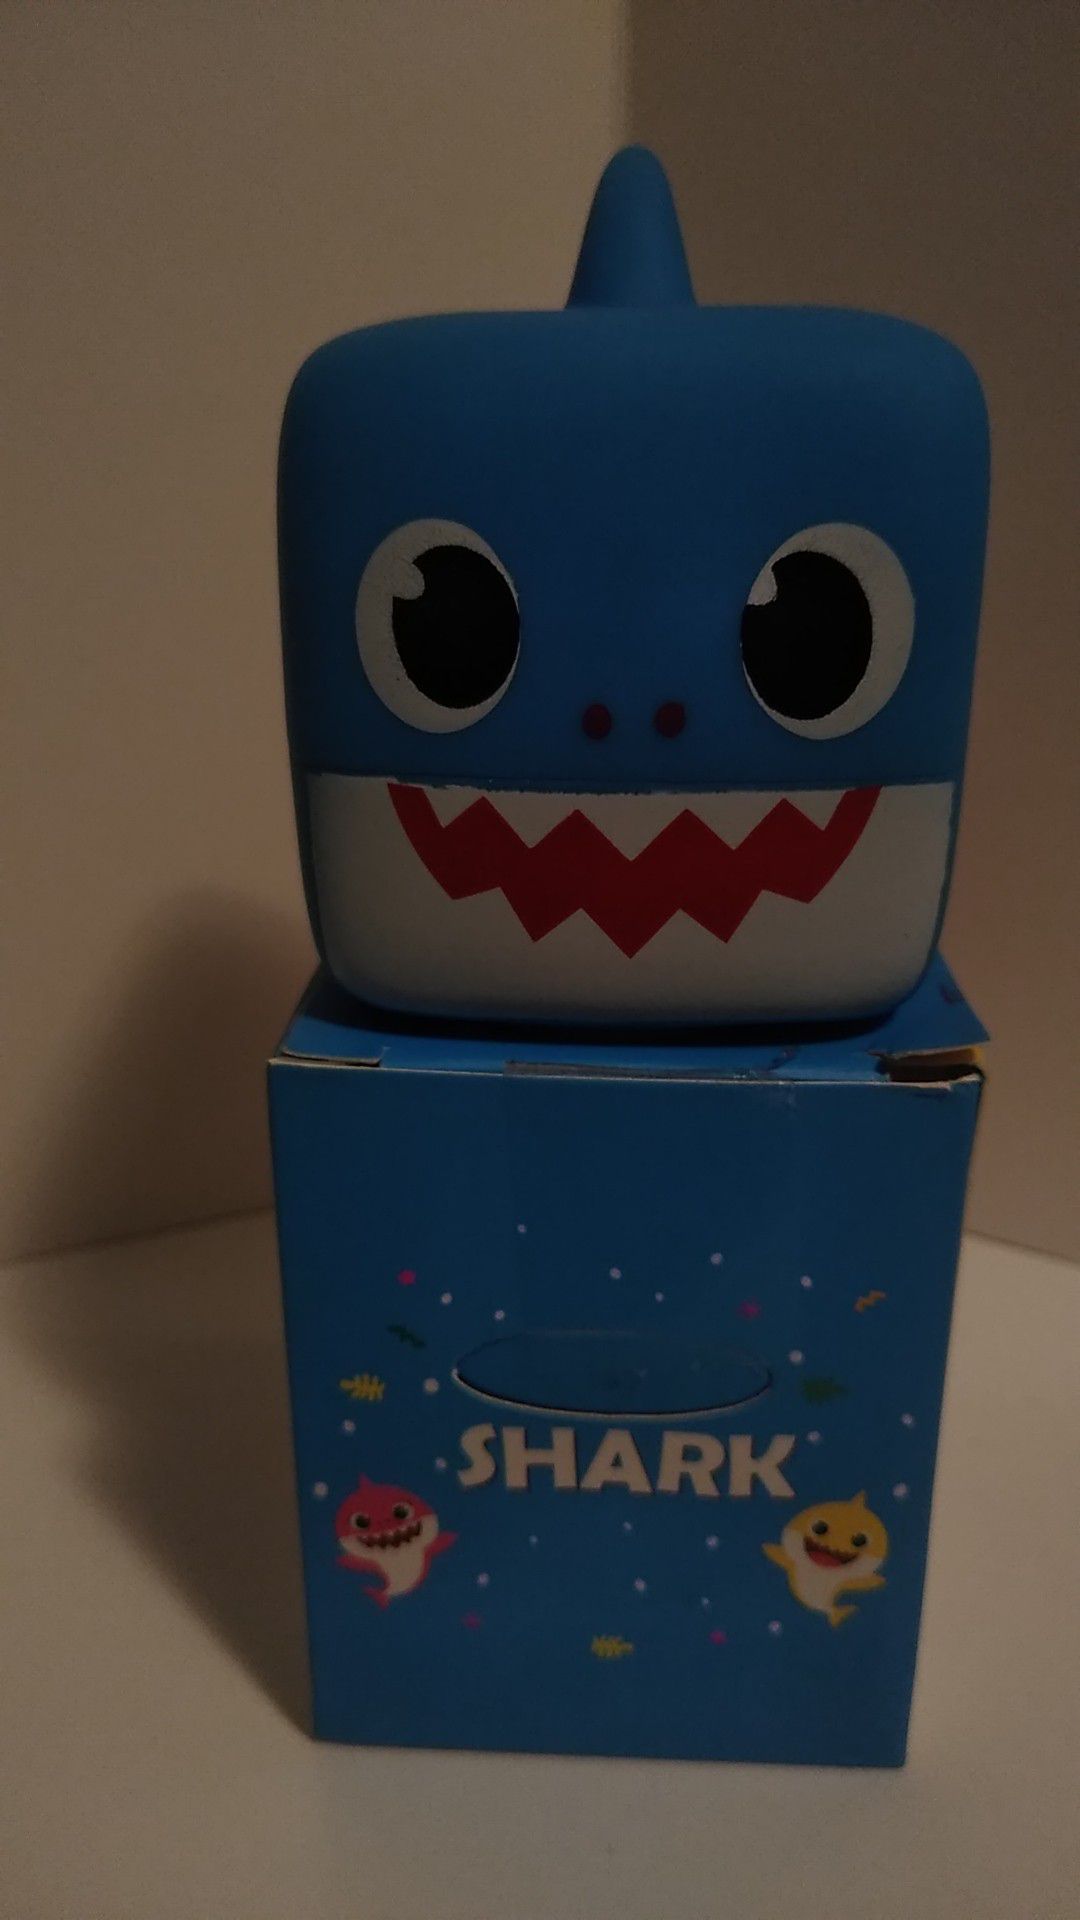 Baby Shark music toy